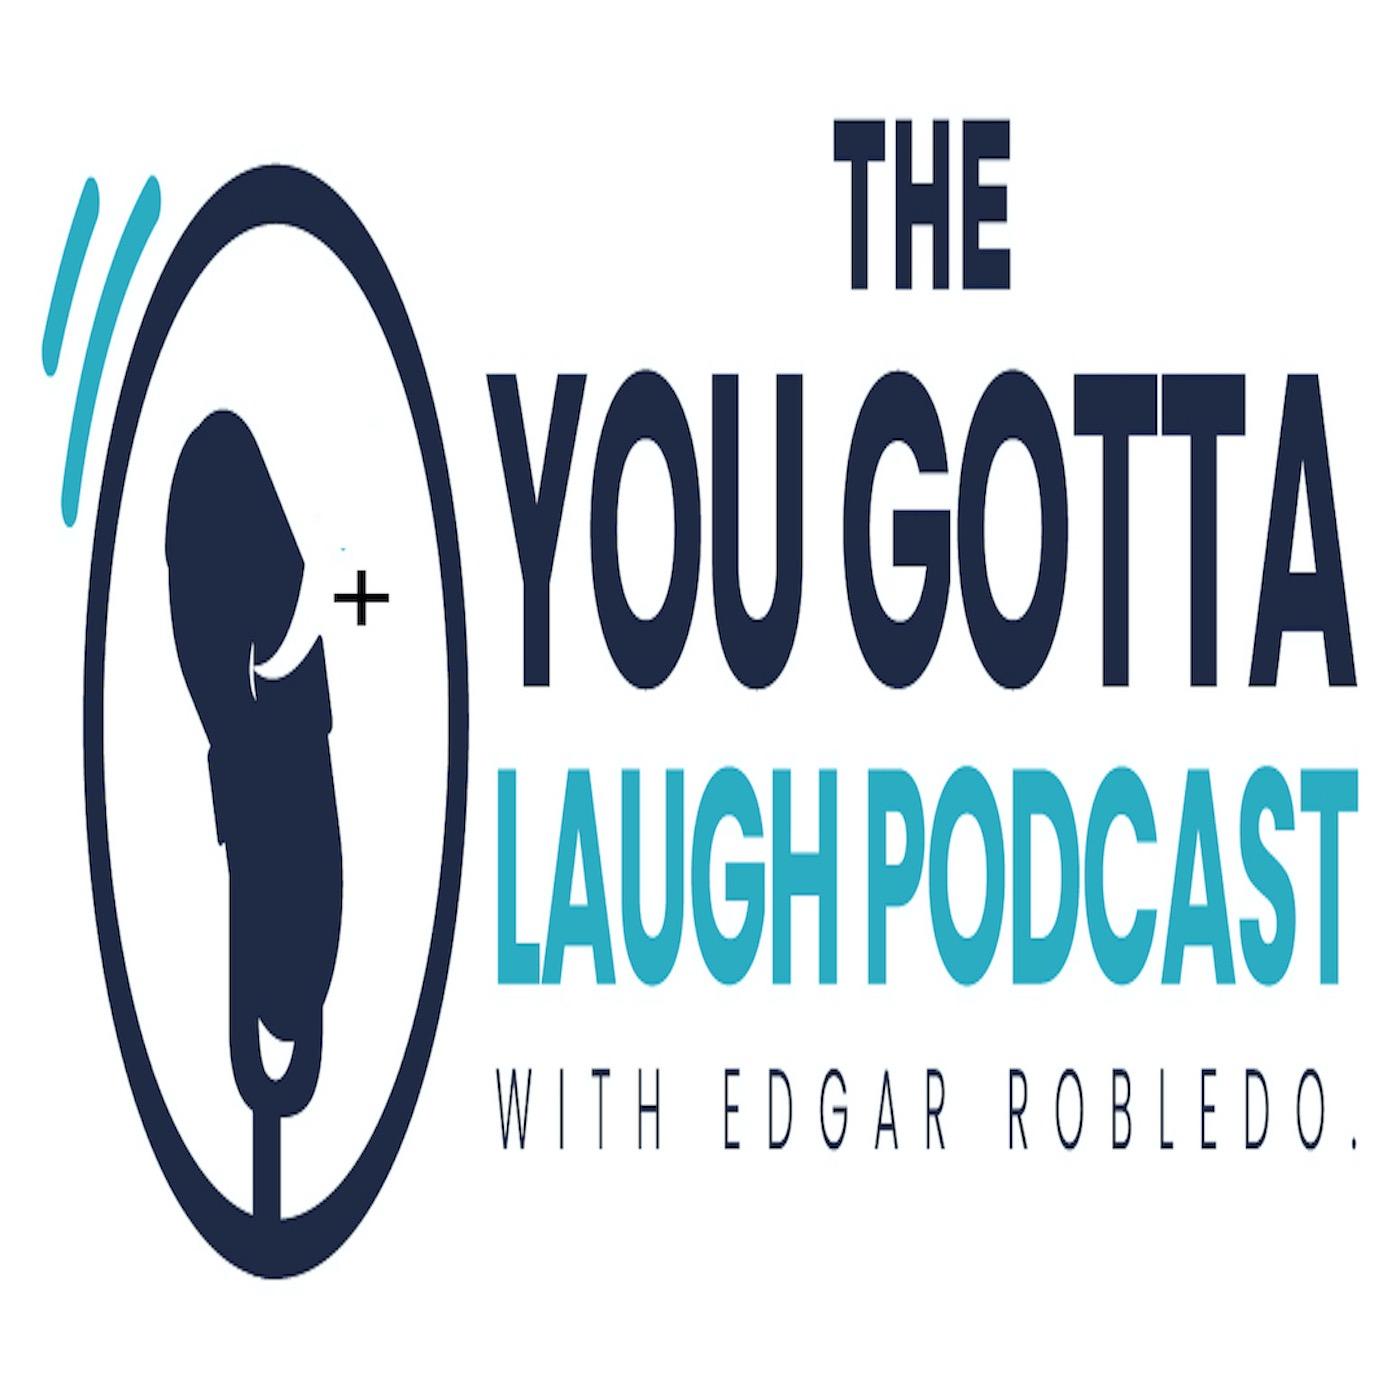 The You Gotta Laugh Podcast+